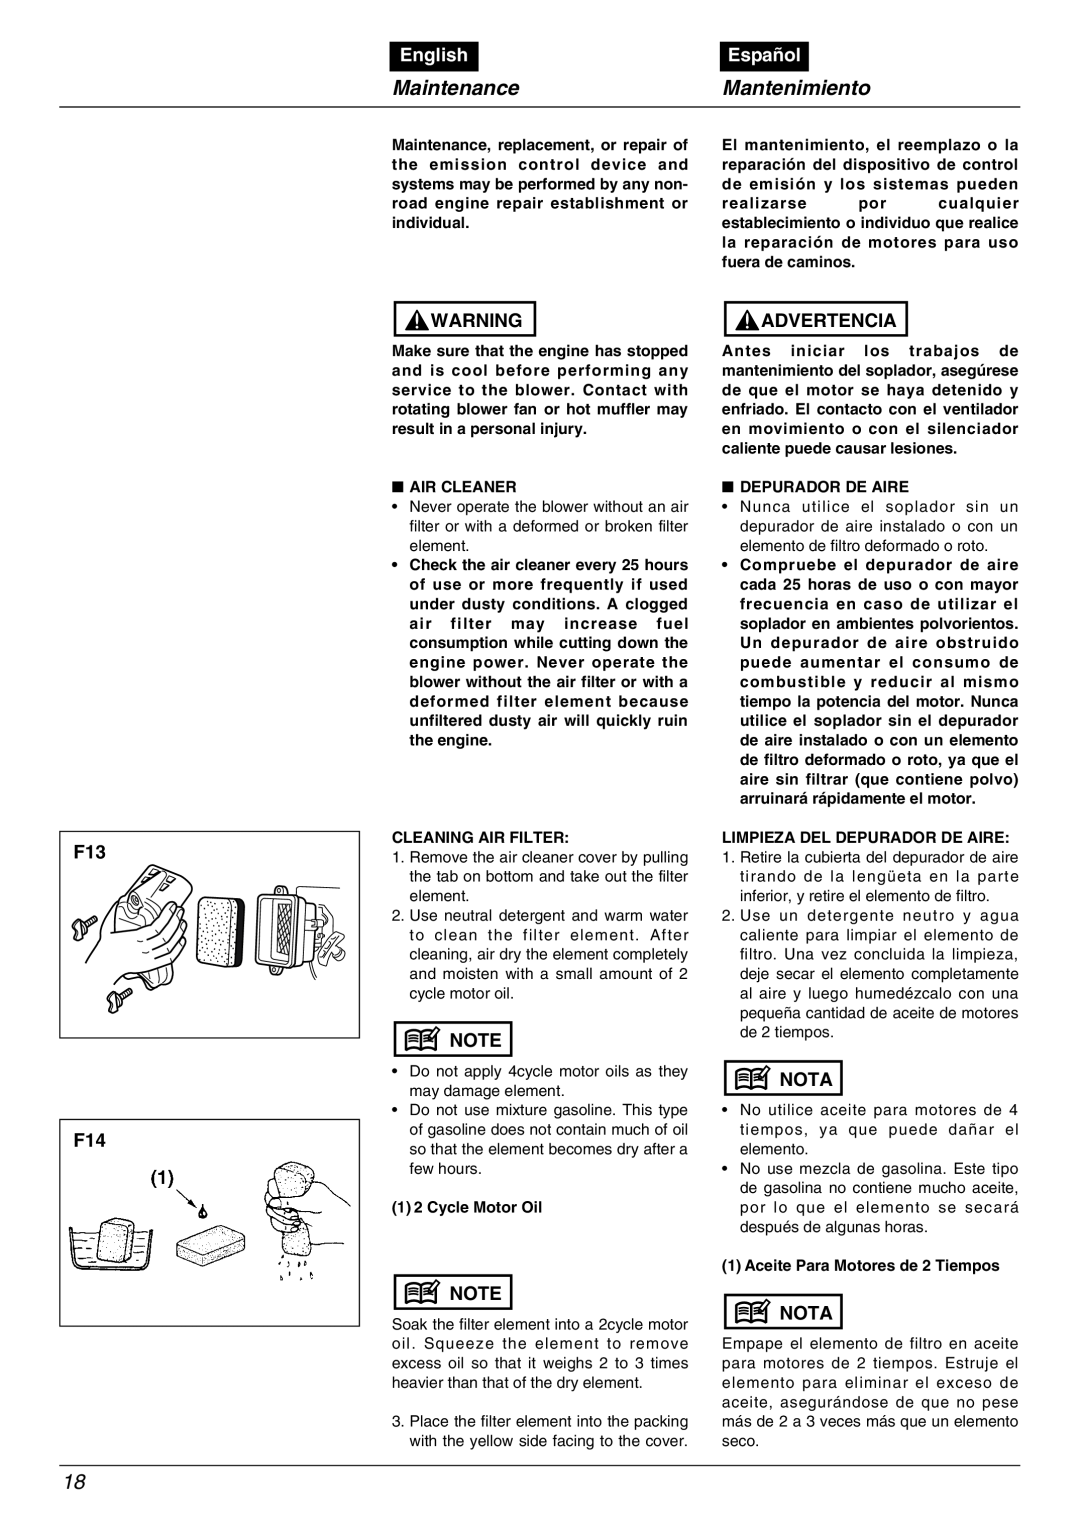 RedMax EBZ5000RH manual MaintenanceMantenimiento, English, Español, Advertencia, Nota 